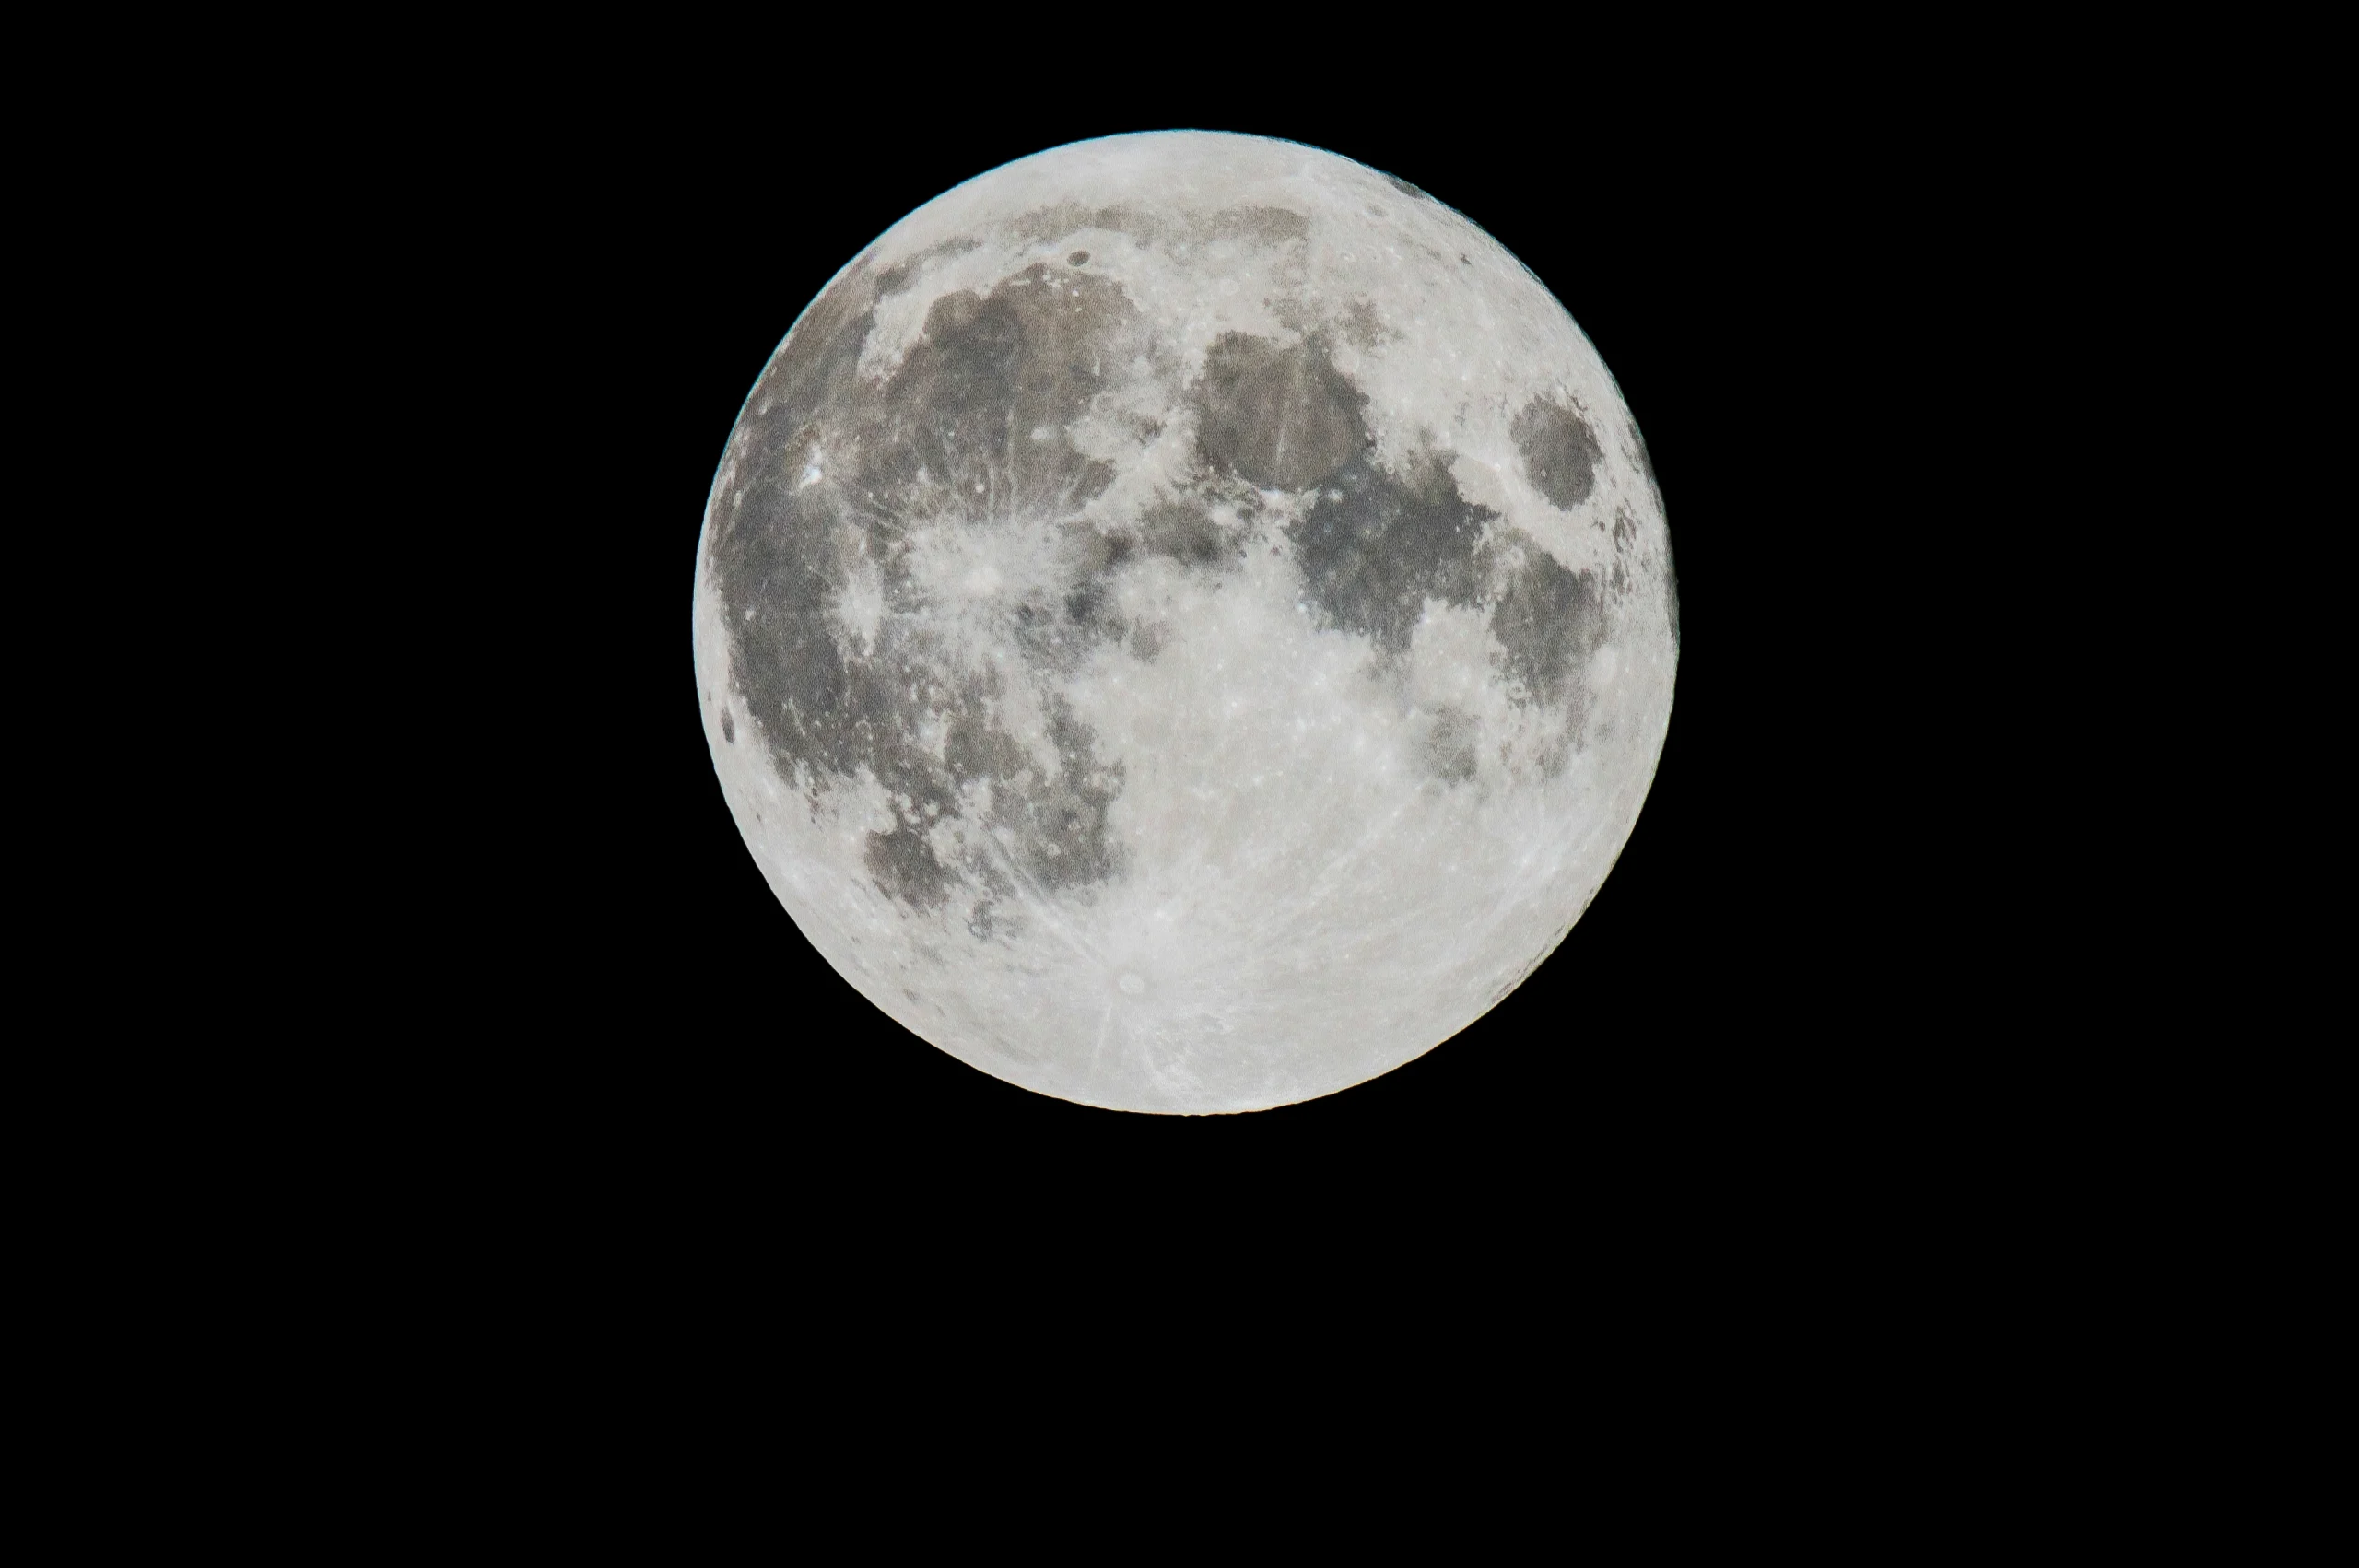 5 full moon d100 500x2 scaled